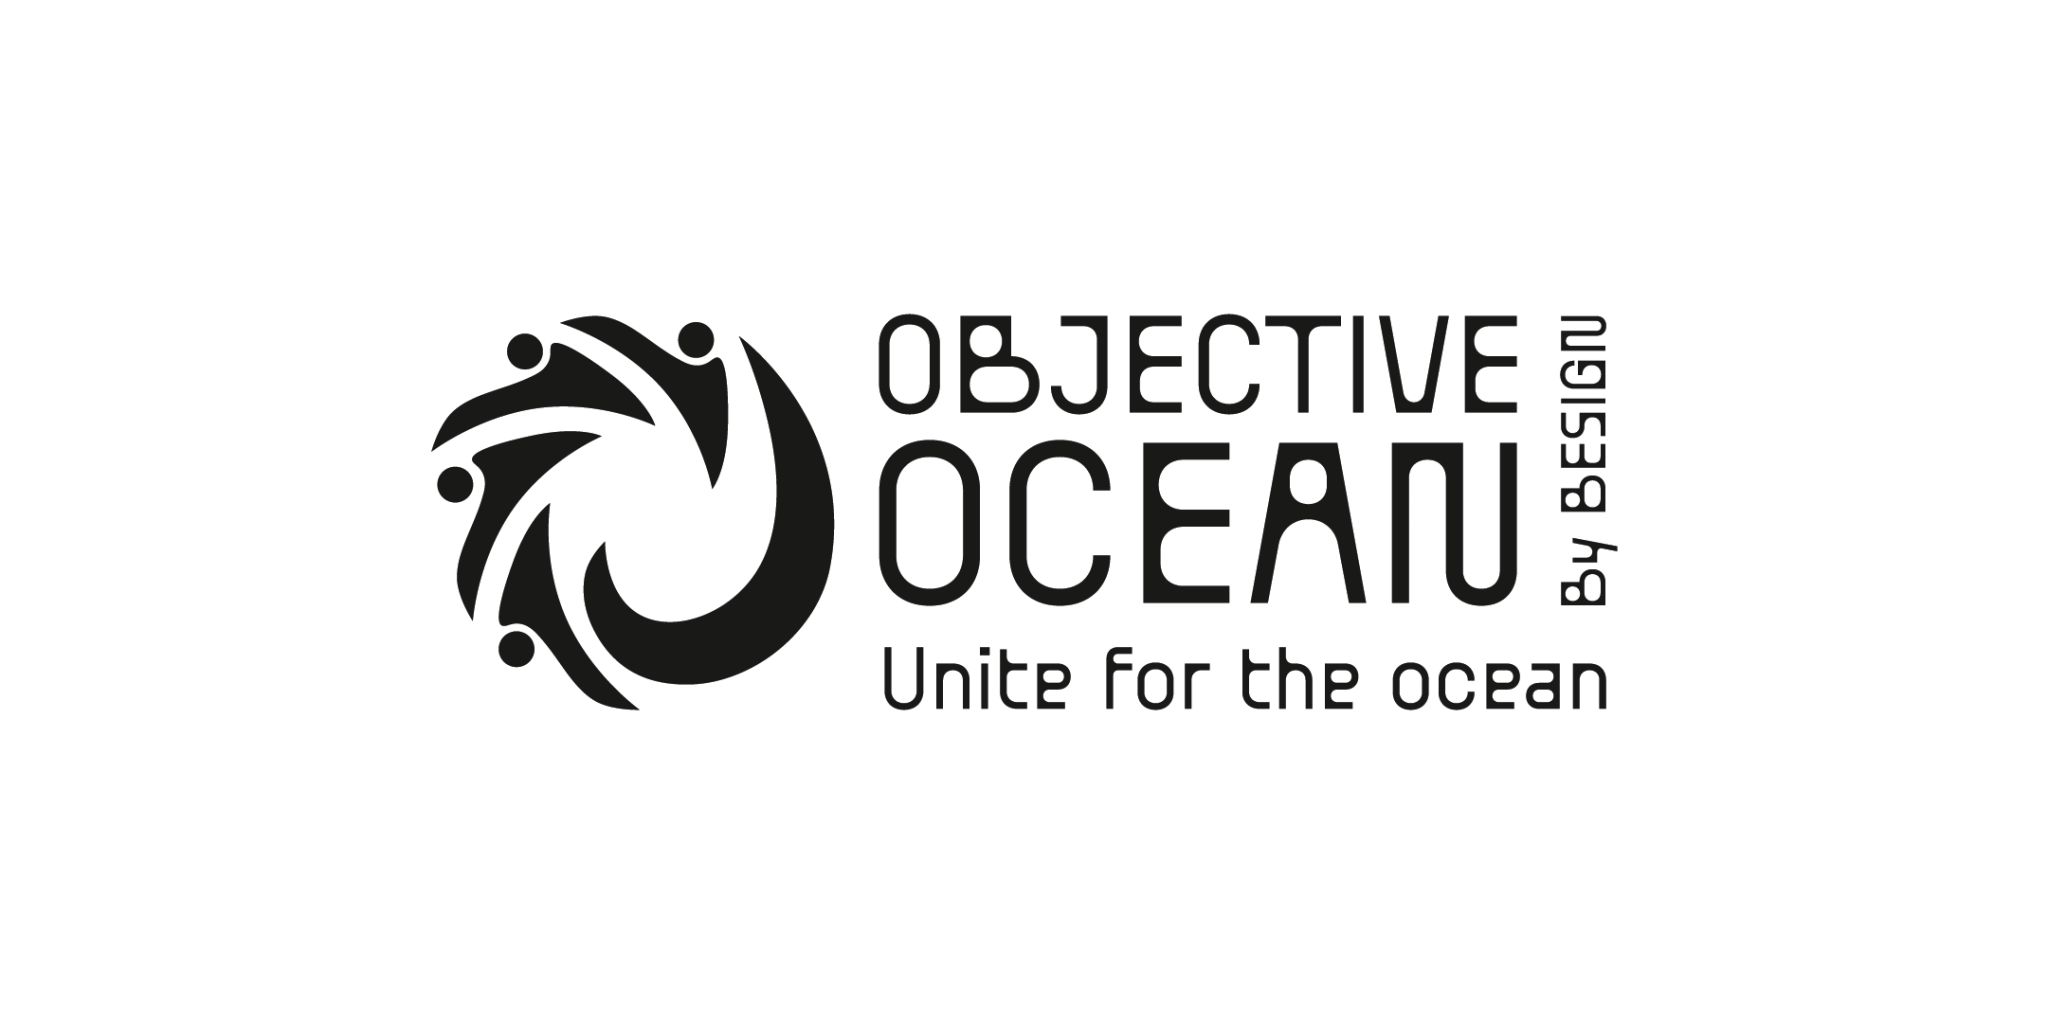 Objective Ocean by Besign